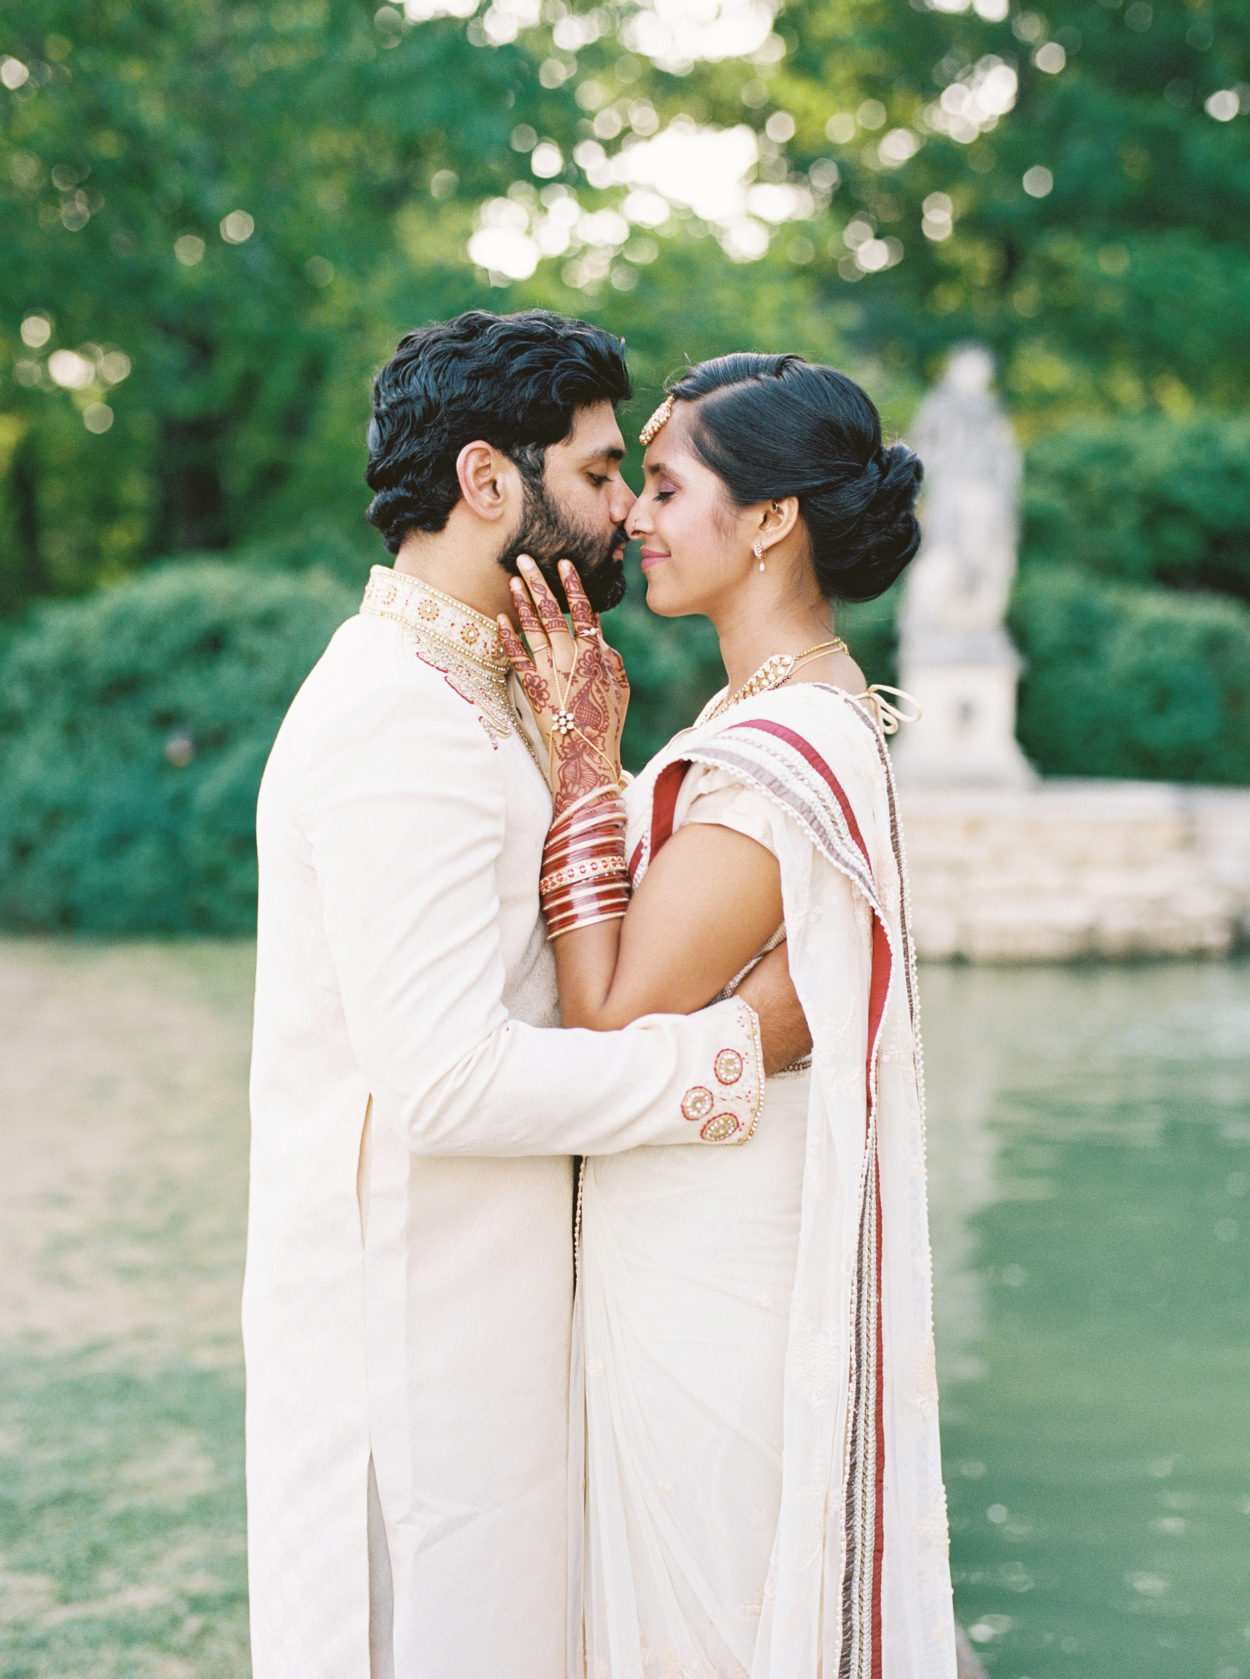 Romantic sunset photos of Indian wedding couple at Cheekwood Gardens in Nashville.